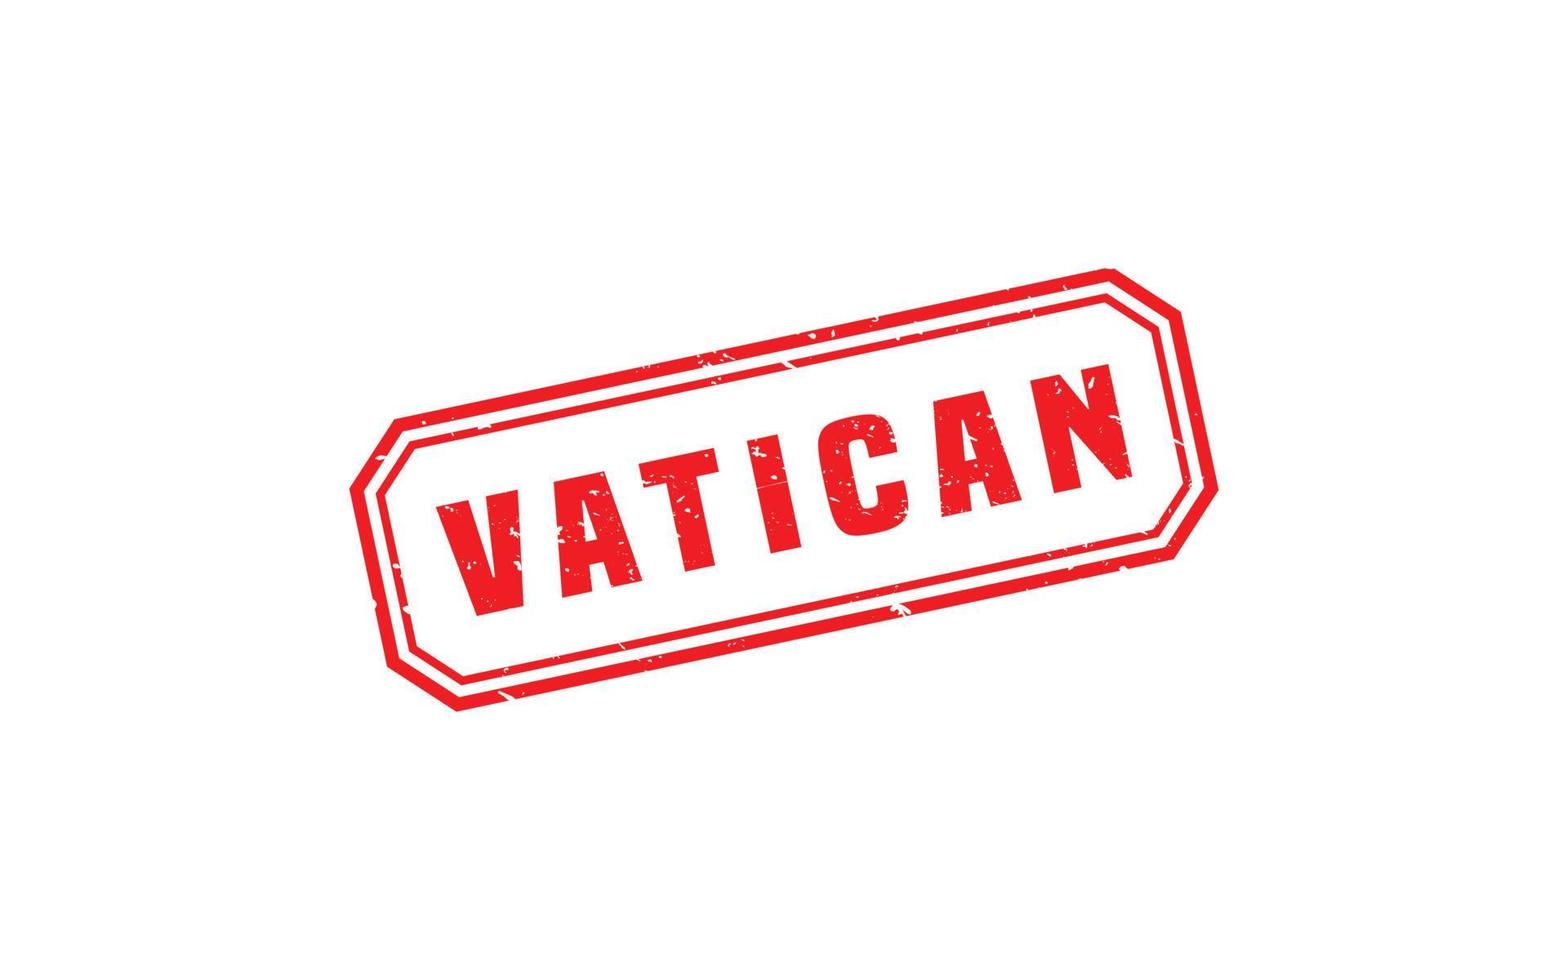 carimbo vaticano com estilo grunge em fundo branco vetor